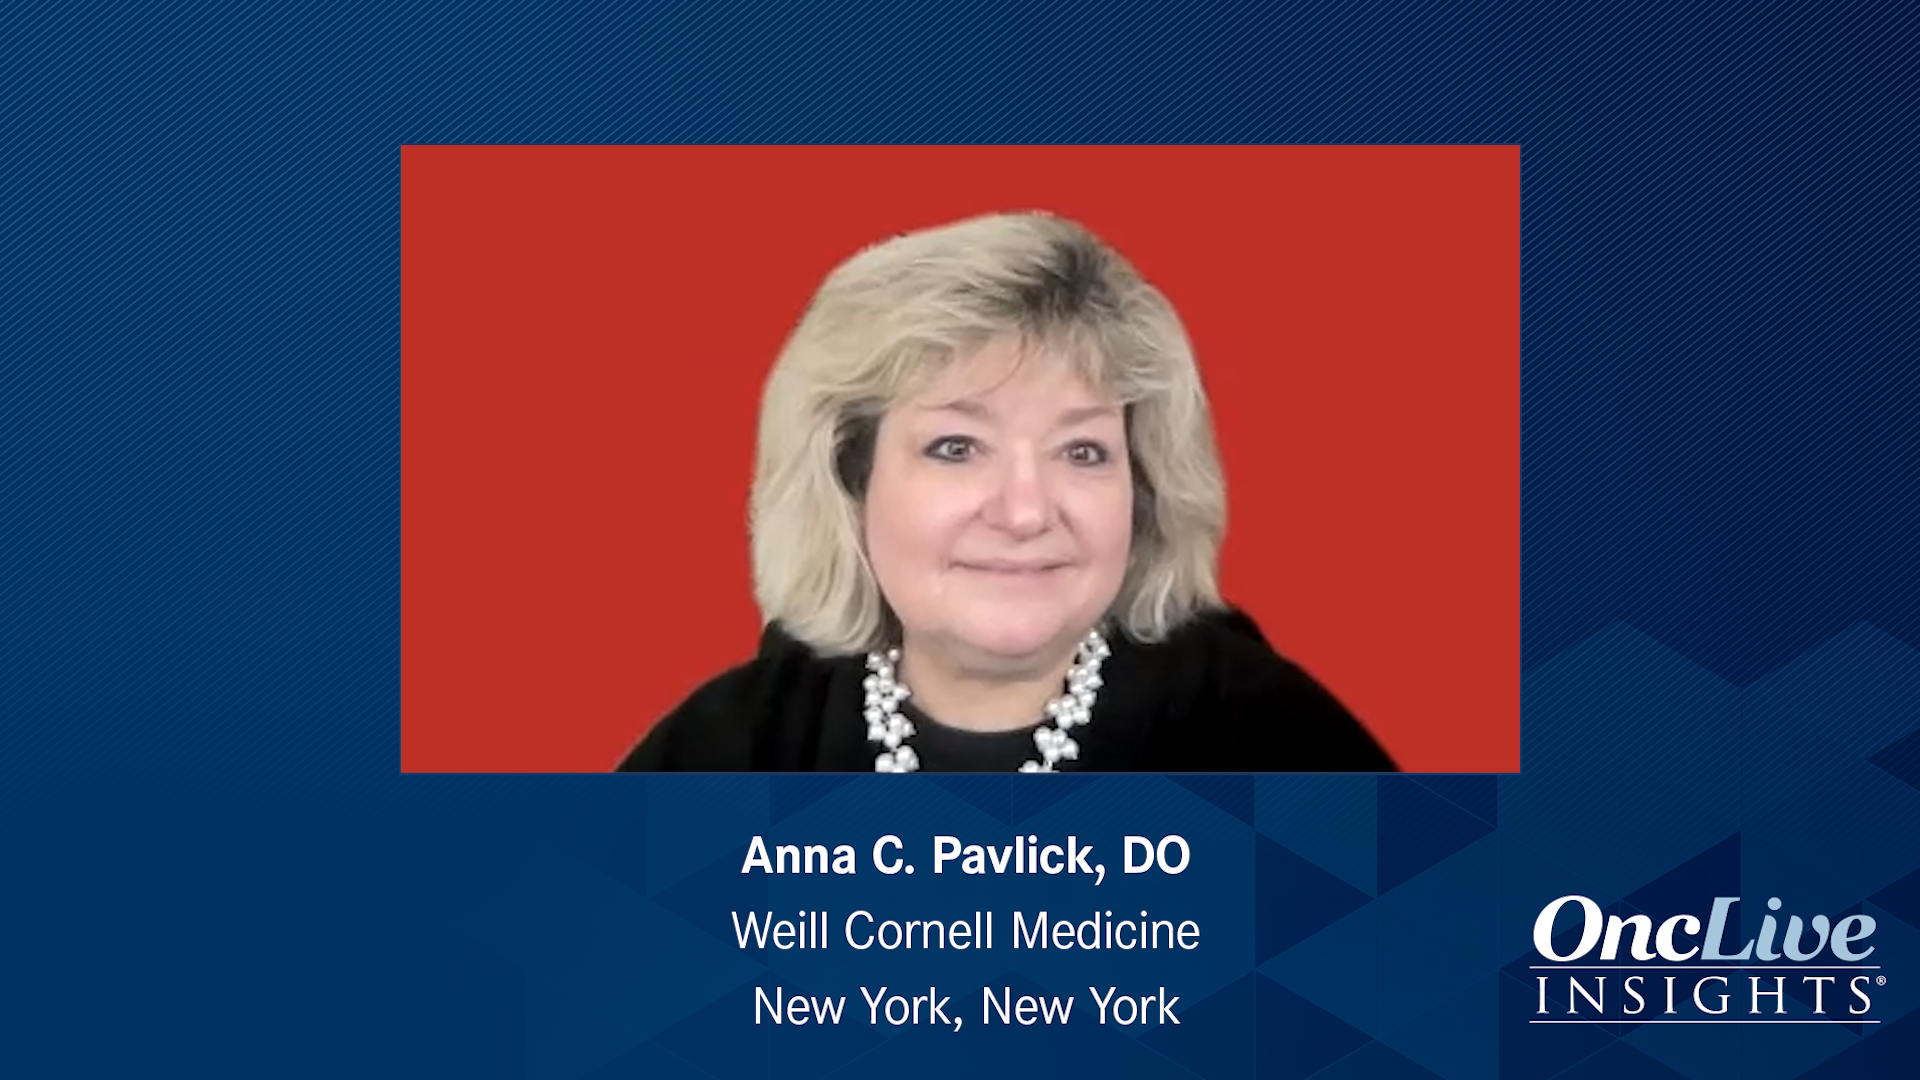 Anna C. Pavlick, DO, an expert on skin cancer